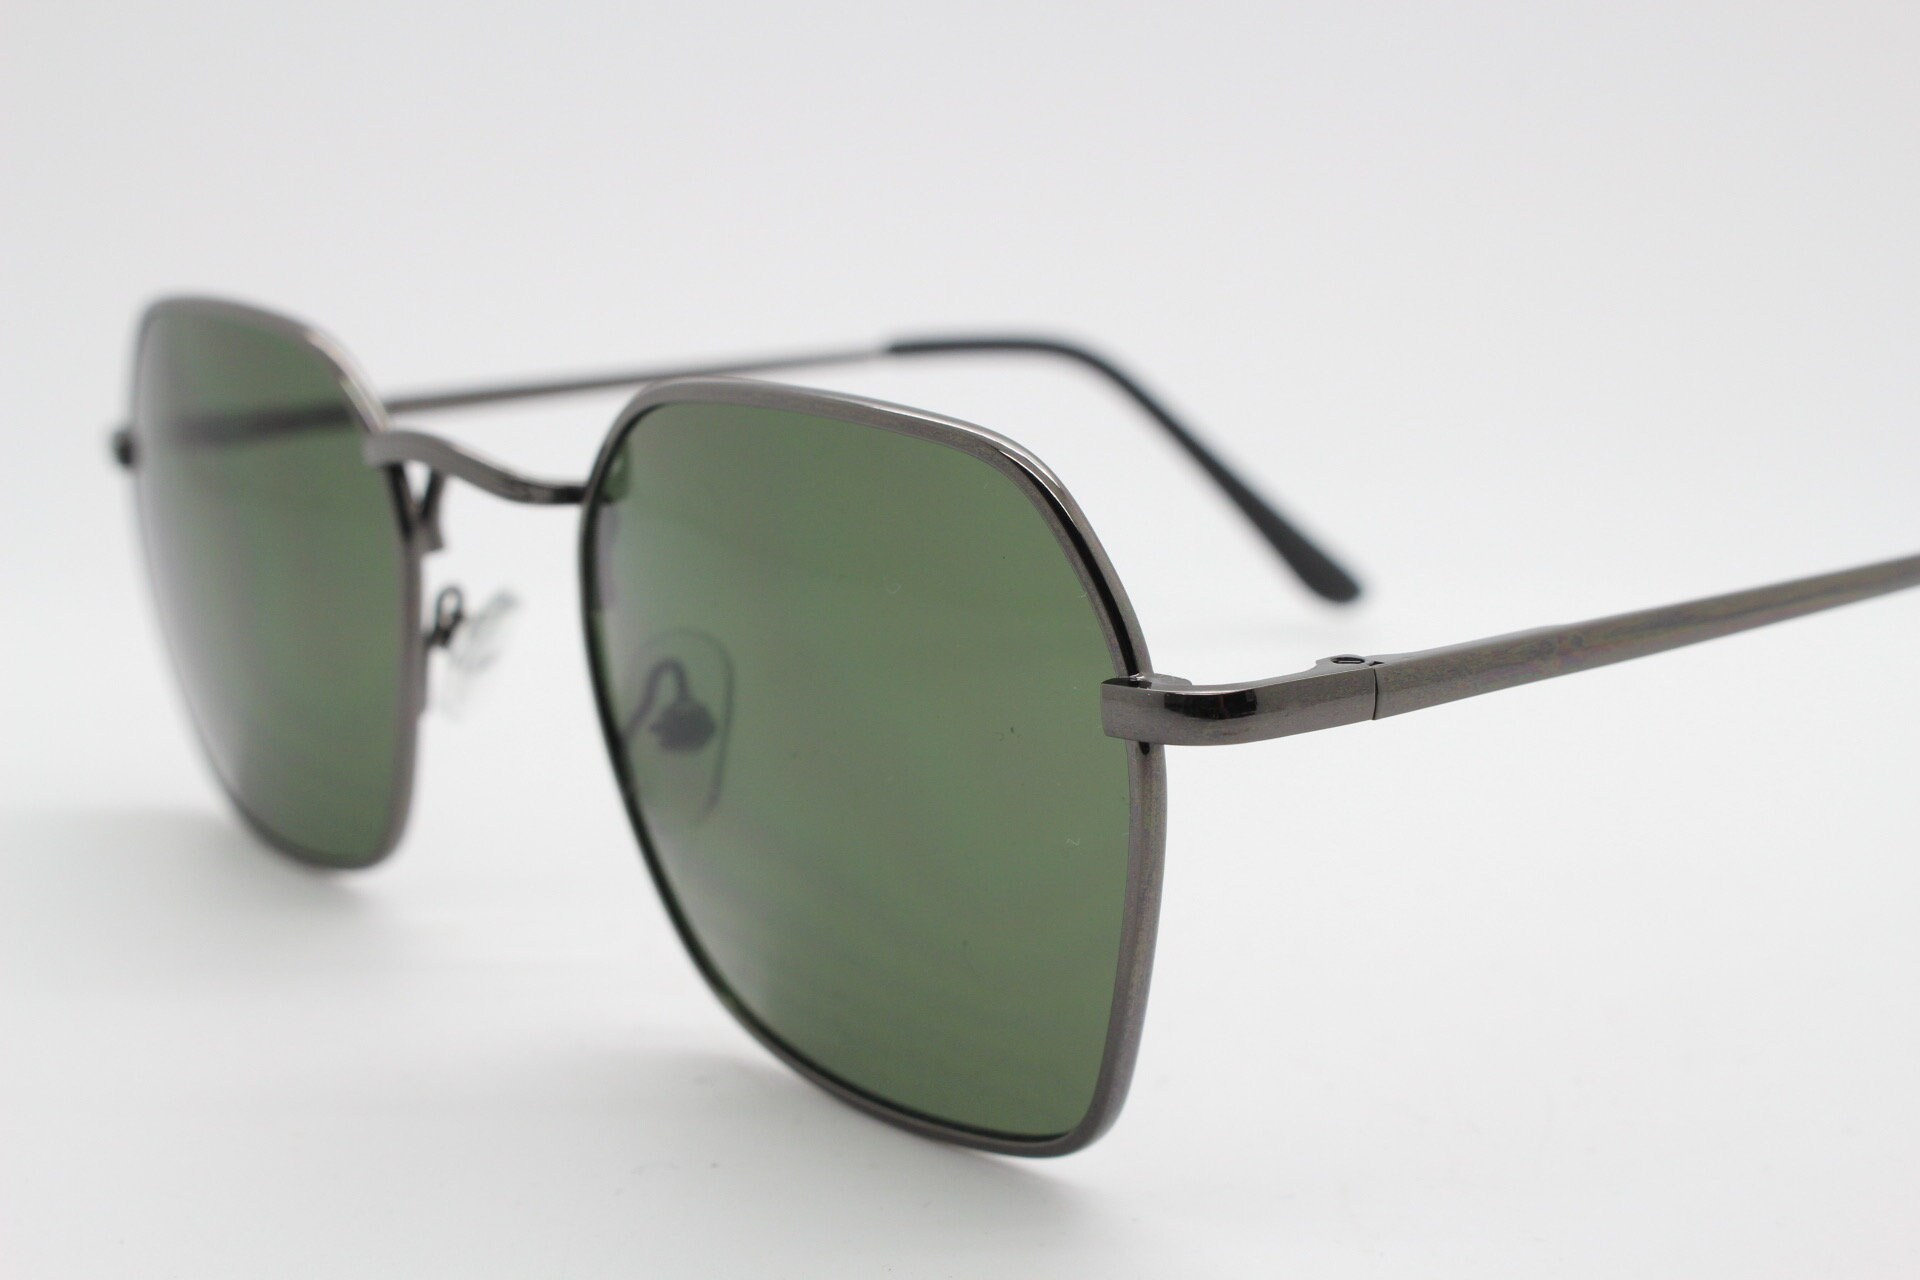 90s vintage angular 6 sided sunglasses Gunmetal grey frame | Etsy